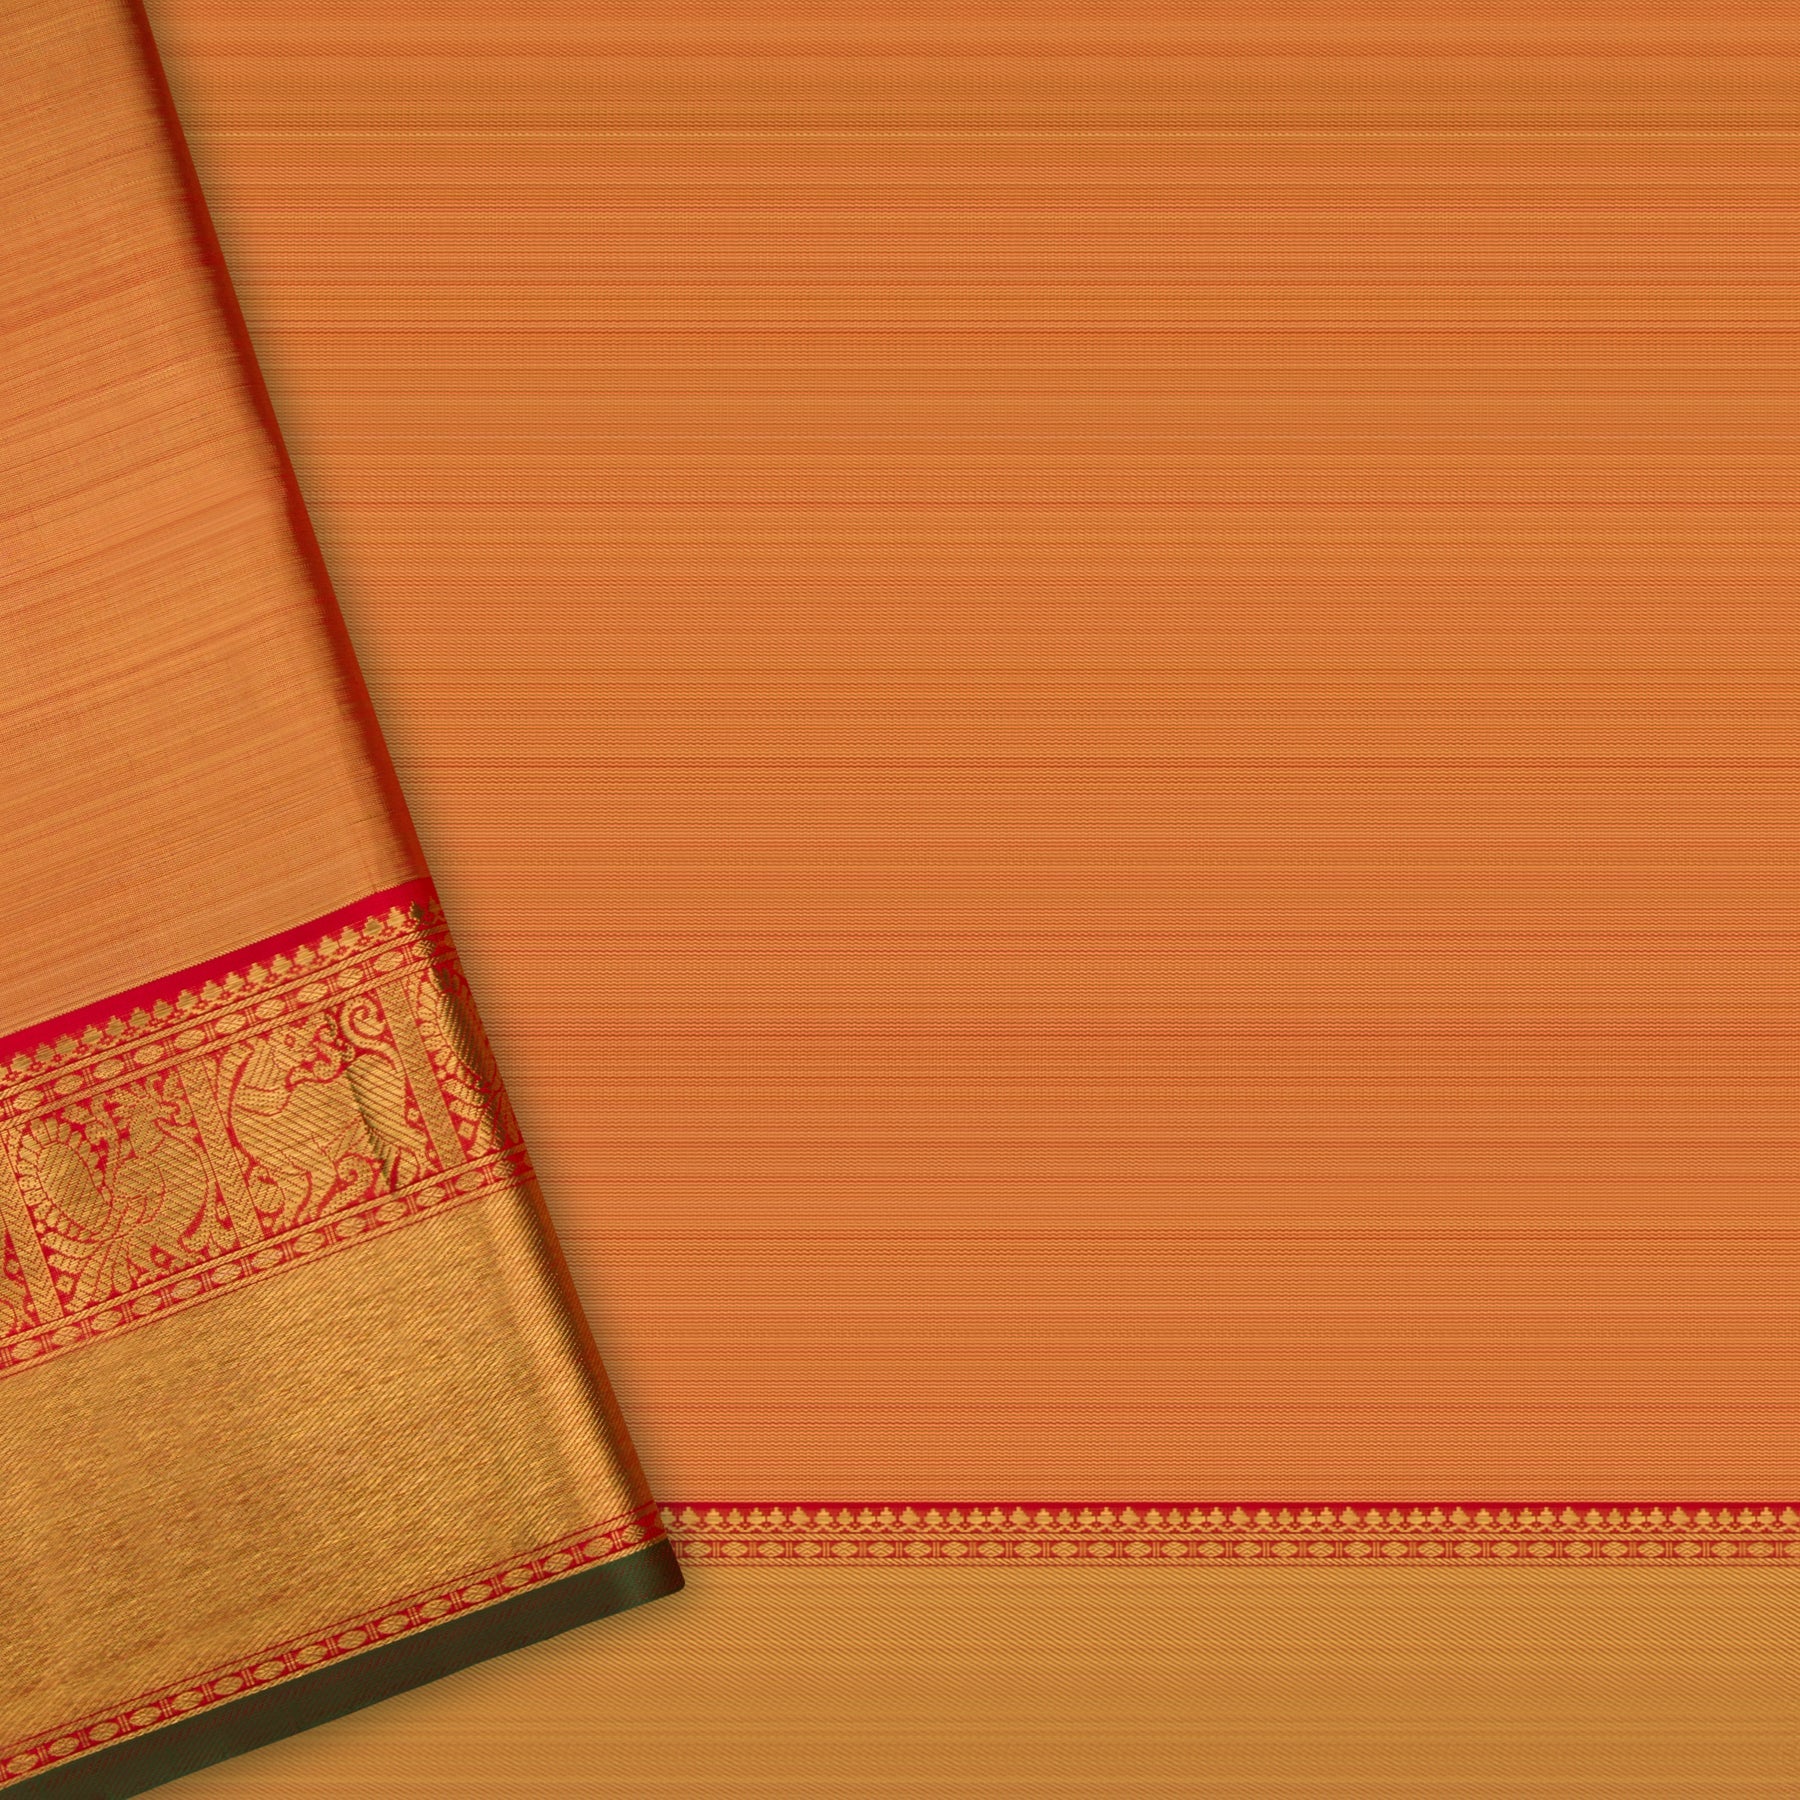 Kanakavalli Kanjivaram Silk Sari 22-110-HS001-14750 - Blouse View